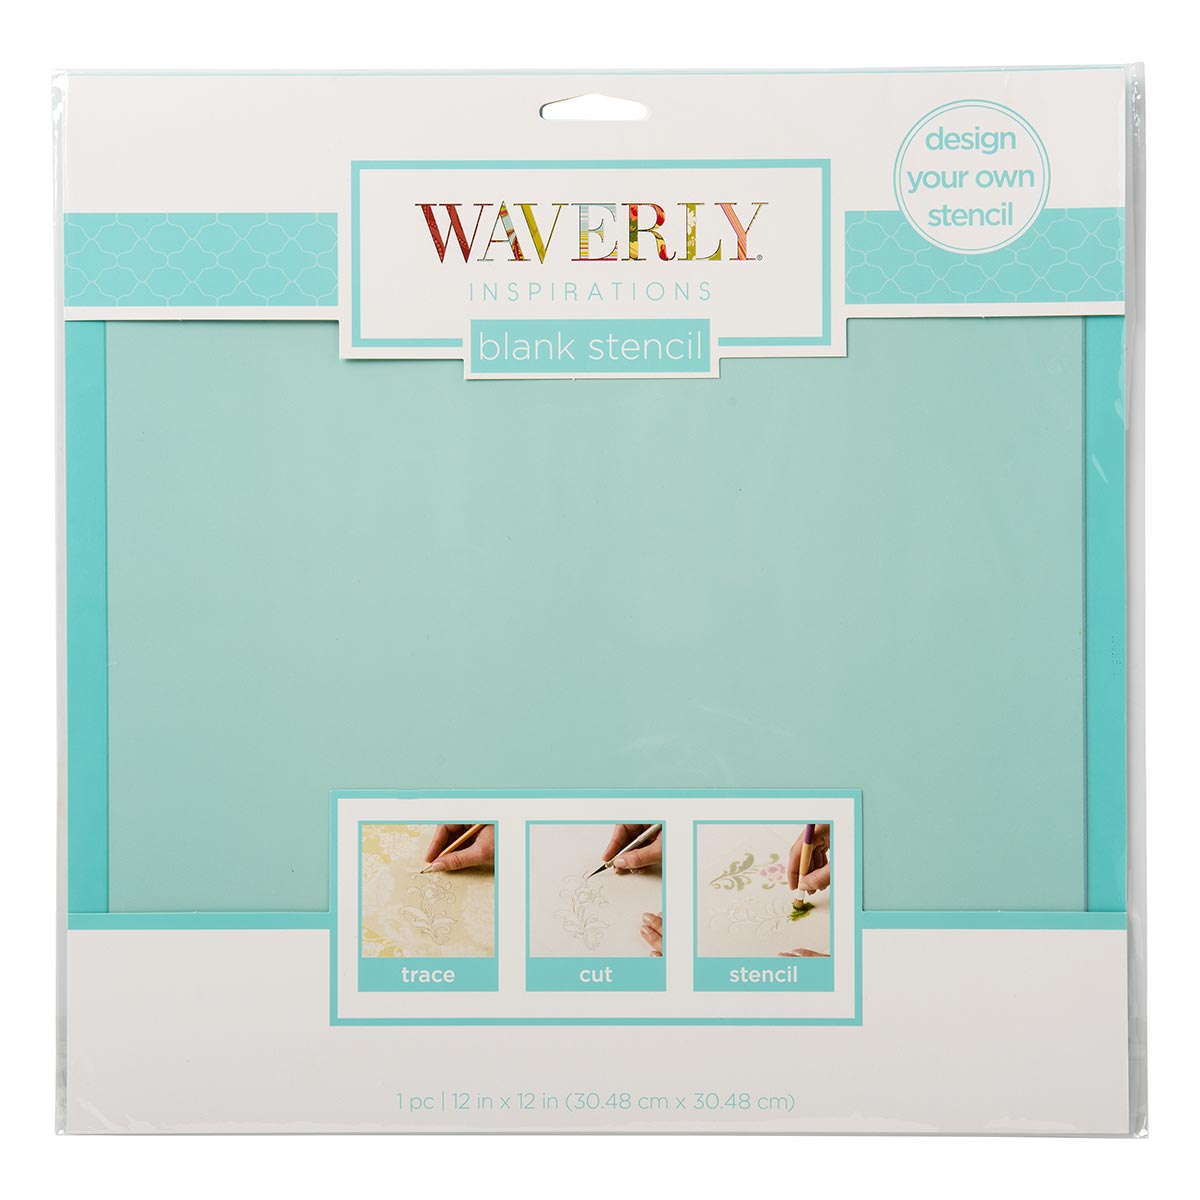 Waverly ® Inspirations Laser Stencils - Blank, 12